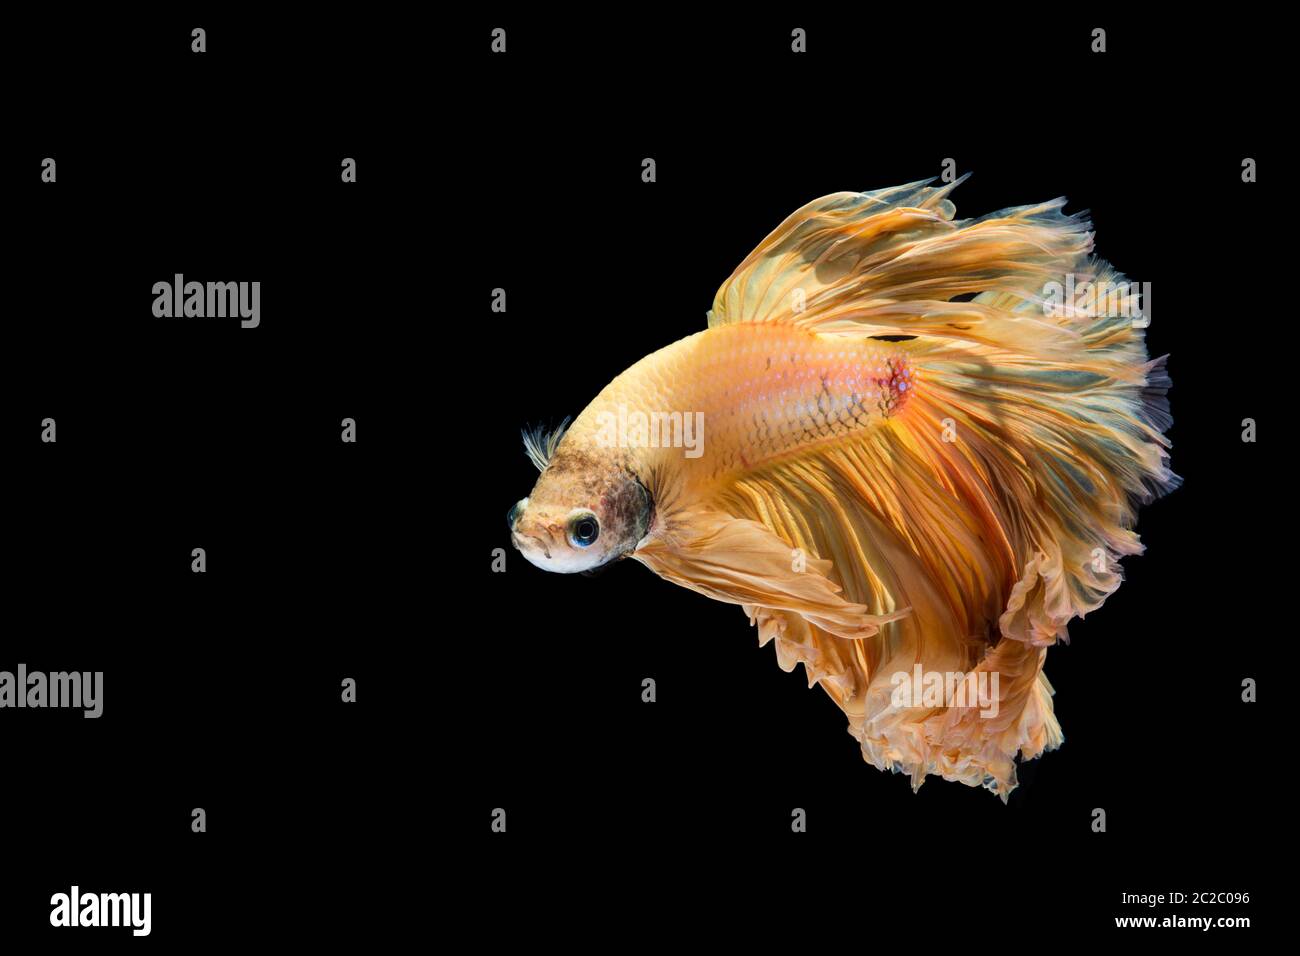 Yellow gold betta fish, siamese fighting fish on black background Stock Photo